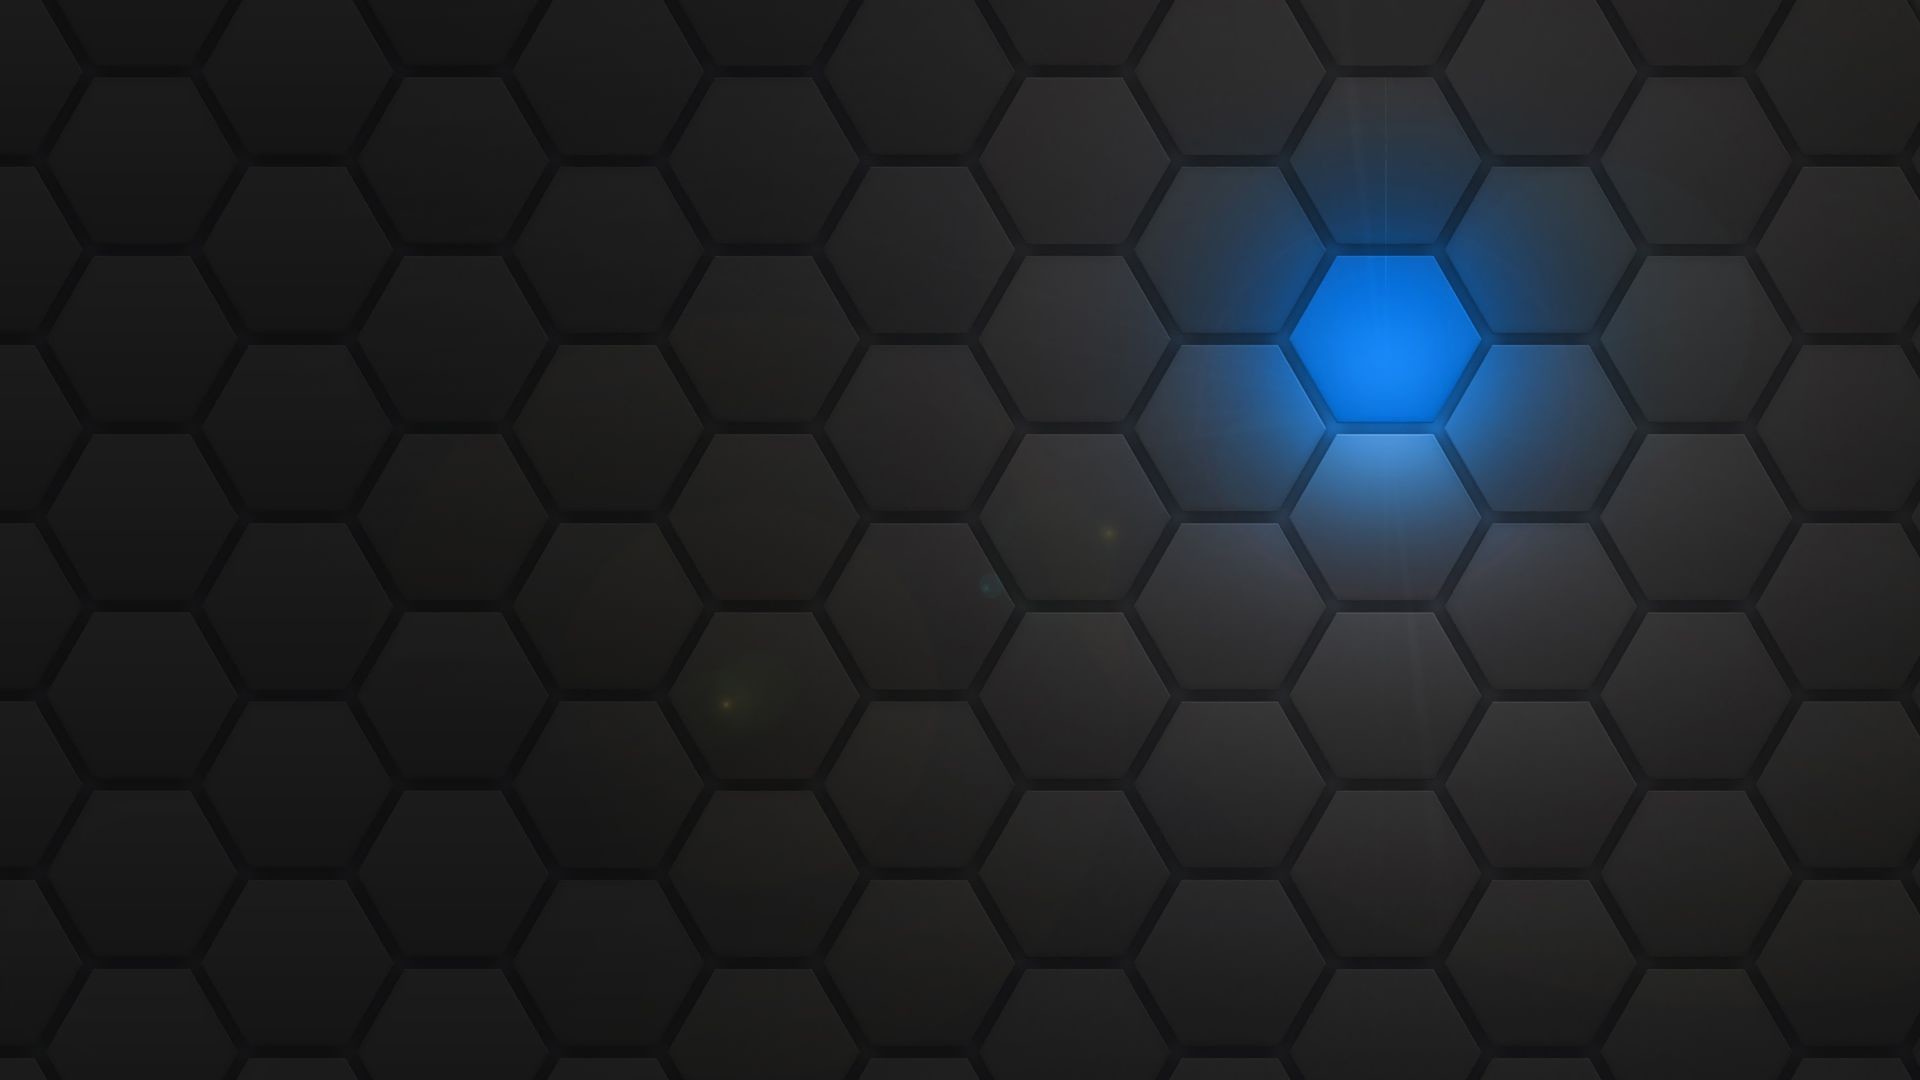 1920x1080 Blue light behind the honeycomb pattern Wallpaper 29001